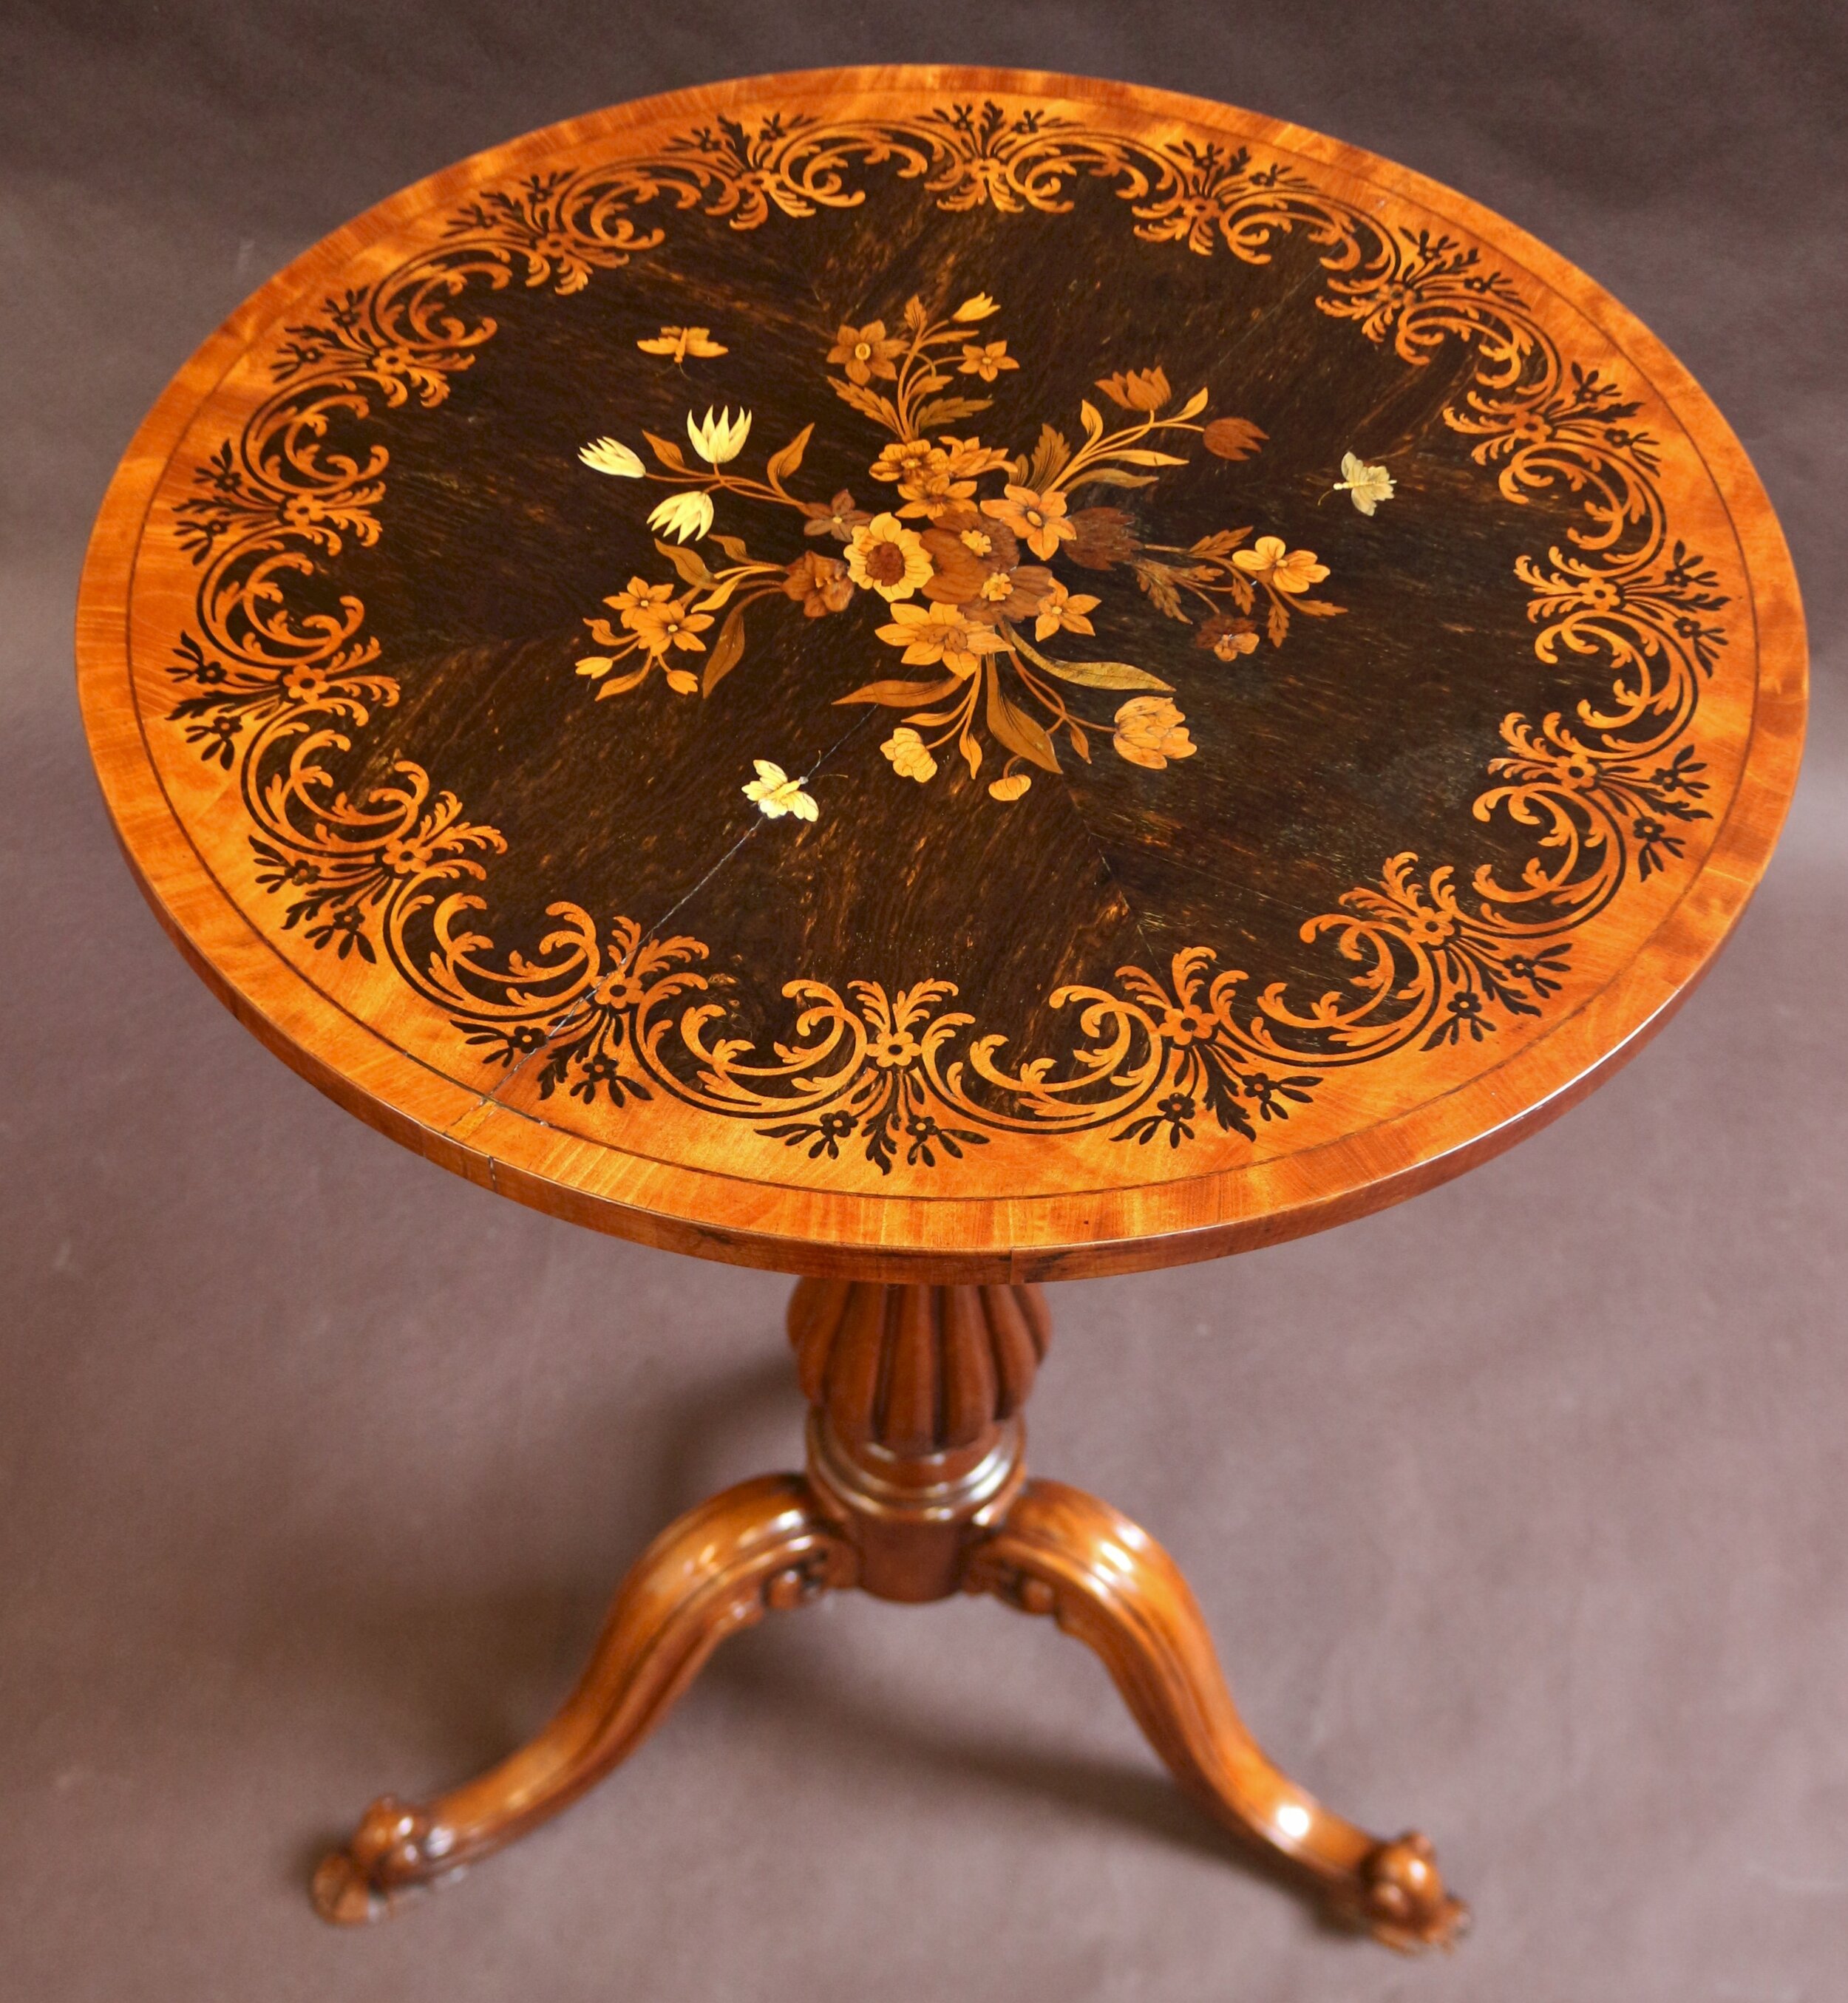 Circa 1830 Louis Philippe Tilt Top Burl Lemonwood Table from